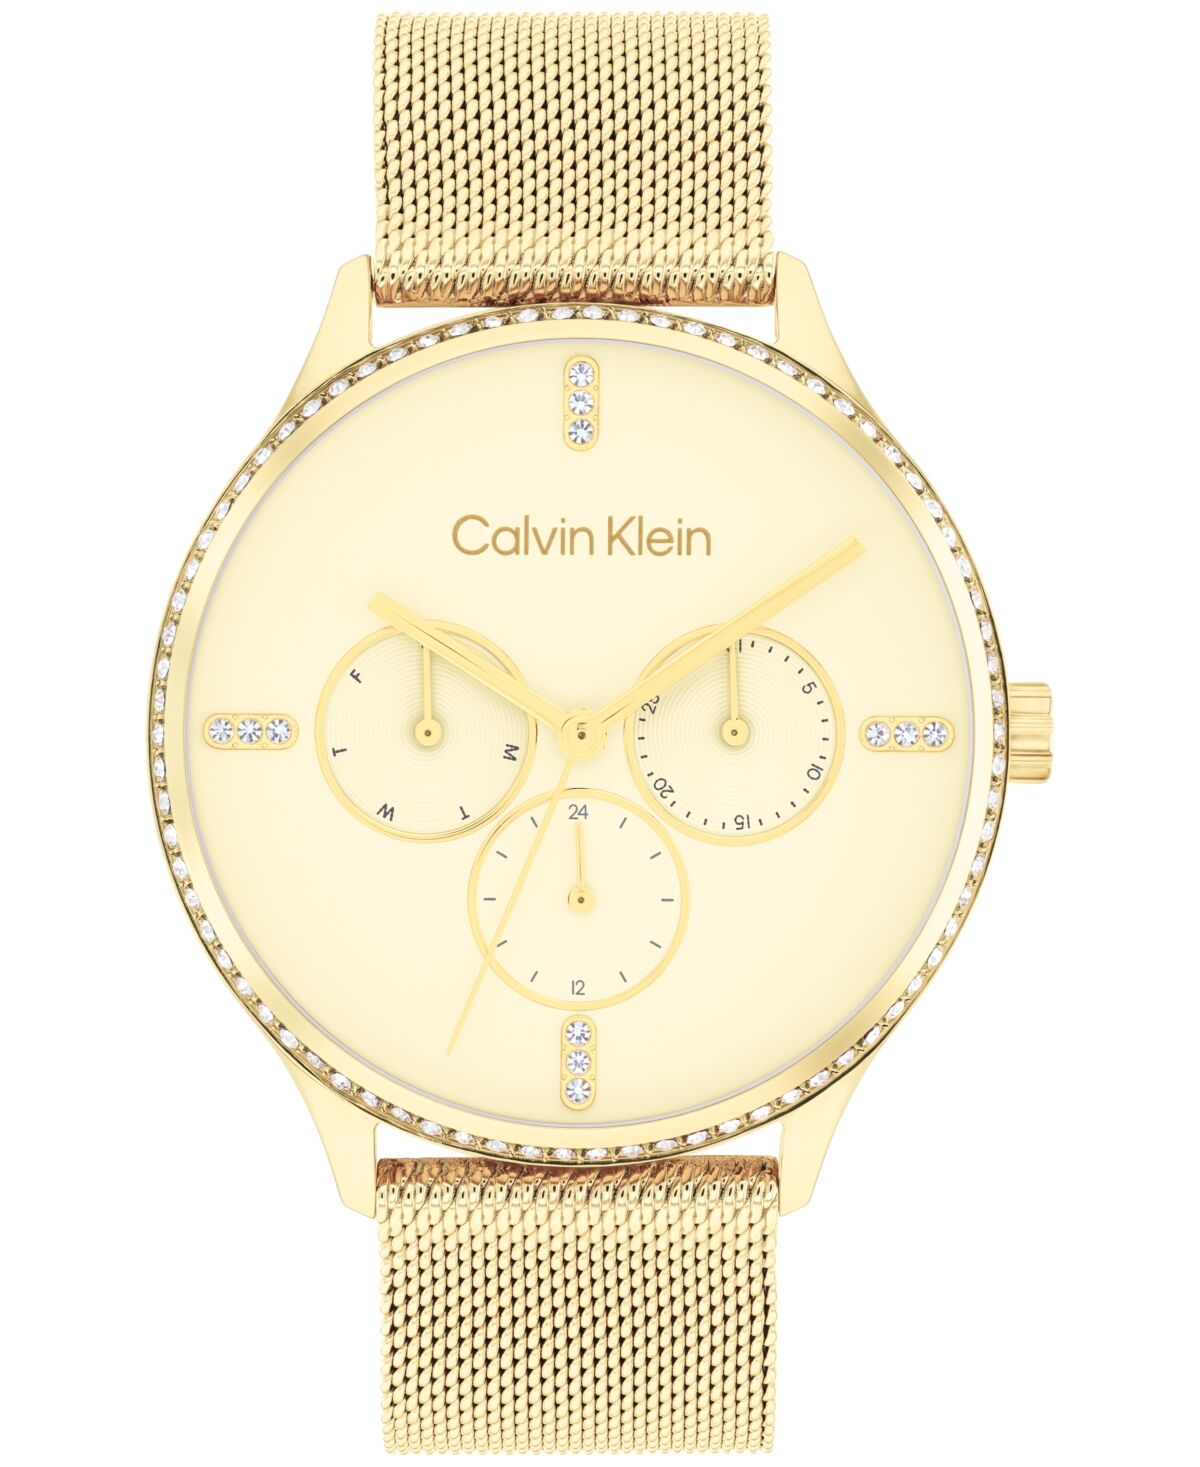 Calvin Klein Women's Multi-Function Gold-Tone Stainless Steel Mesh Bracelet Watch 38mm - Gold